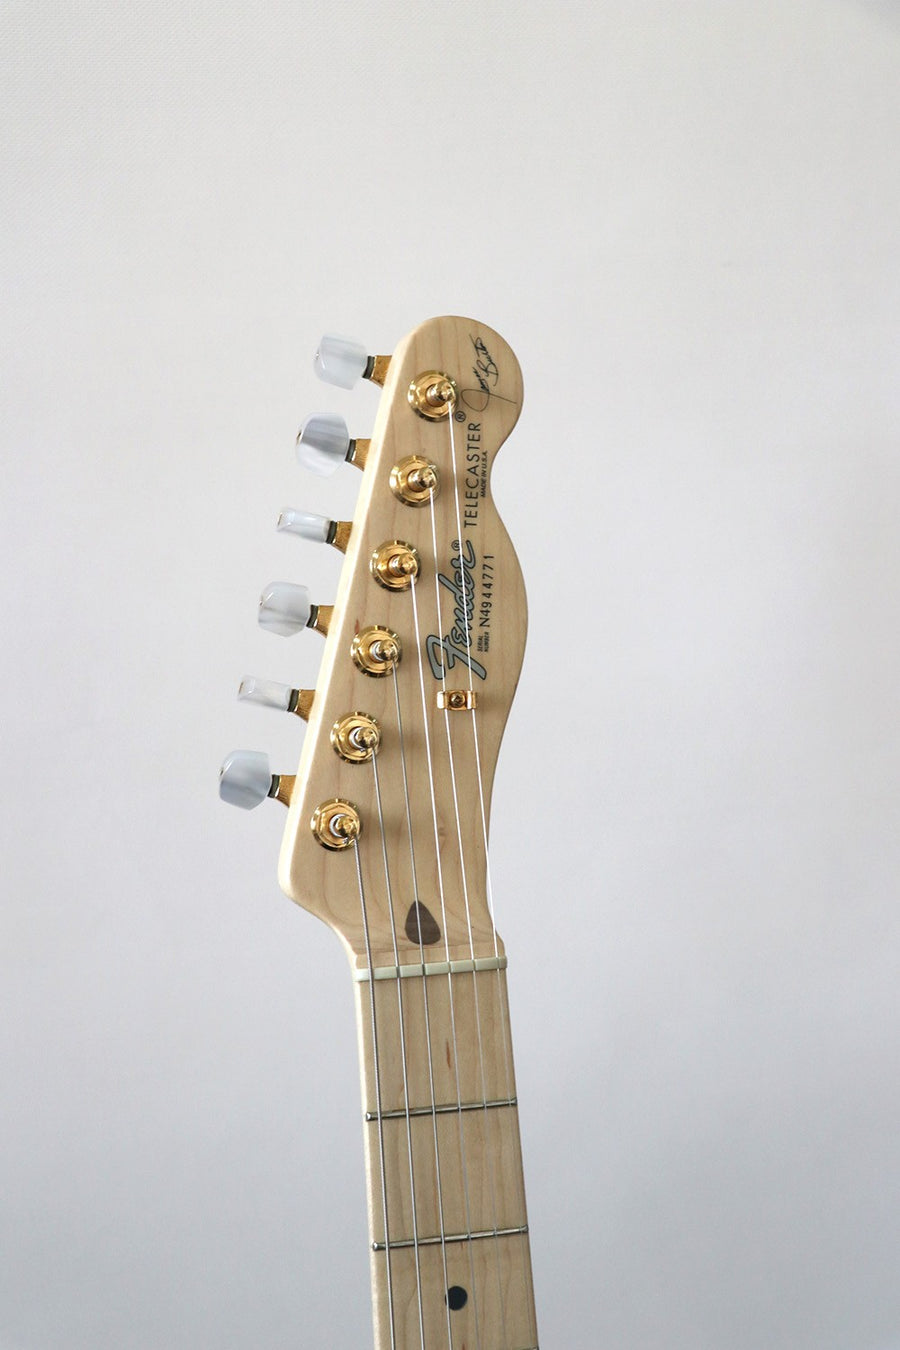 Fender James Burton Telecaster 1994